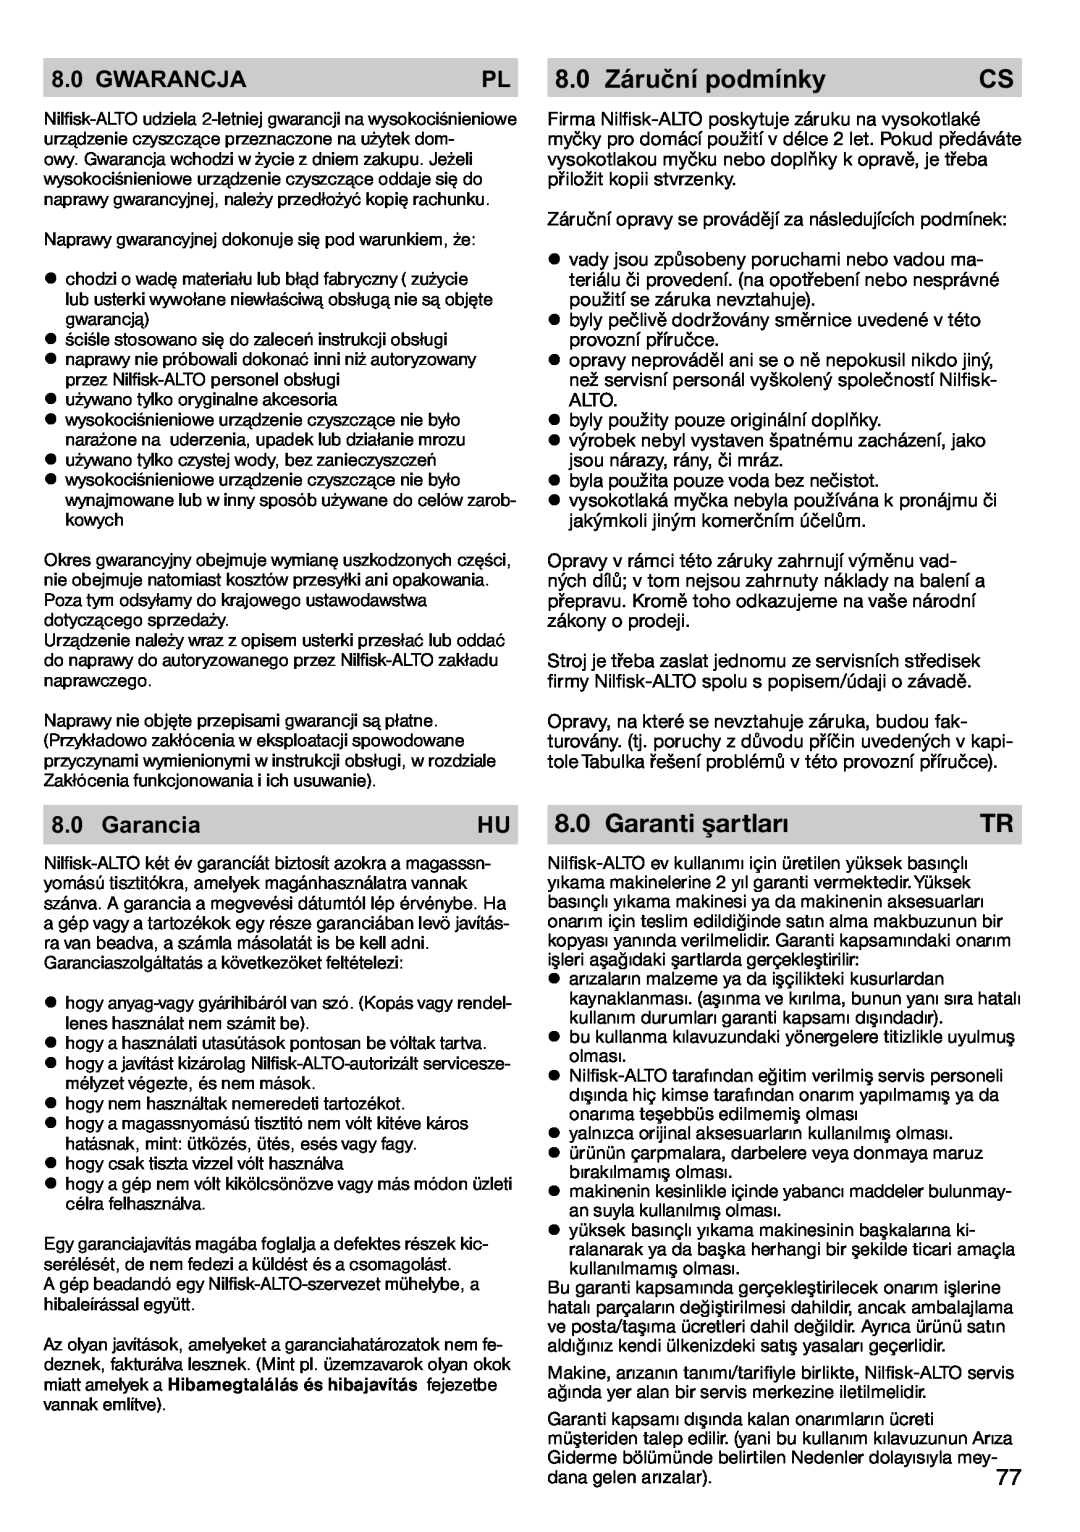 Nilfisk-ALTO POSEIDON 2-21 instruction manual Gwarancja, Garancia, 8.0 Záruční podmínky, Garanti şartları 